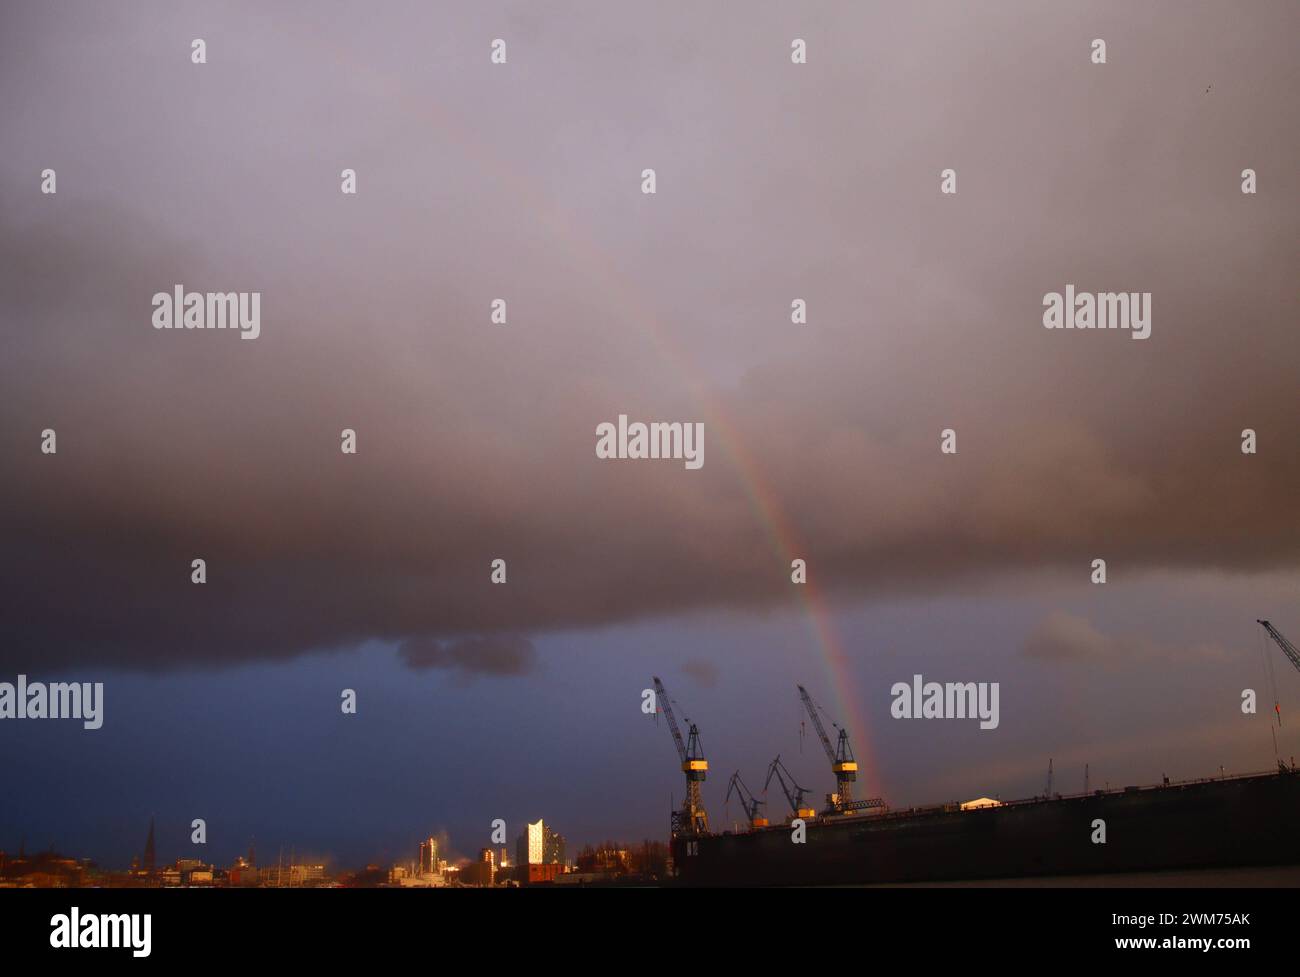 über den Hamburger Hafen zieht eine große und dunkle Wolkenbank. Kurz zeigt sich ein Regenbogen. *** Une grande banque de nuages sombre passe au-dessus du port de Hambourg Un arc-en-ciel apparaît brièvement Banque D'Images